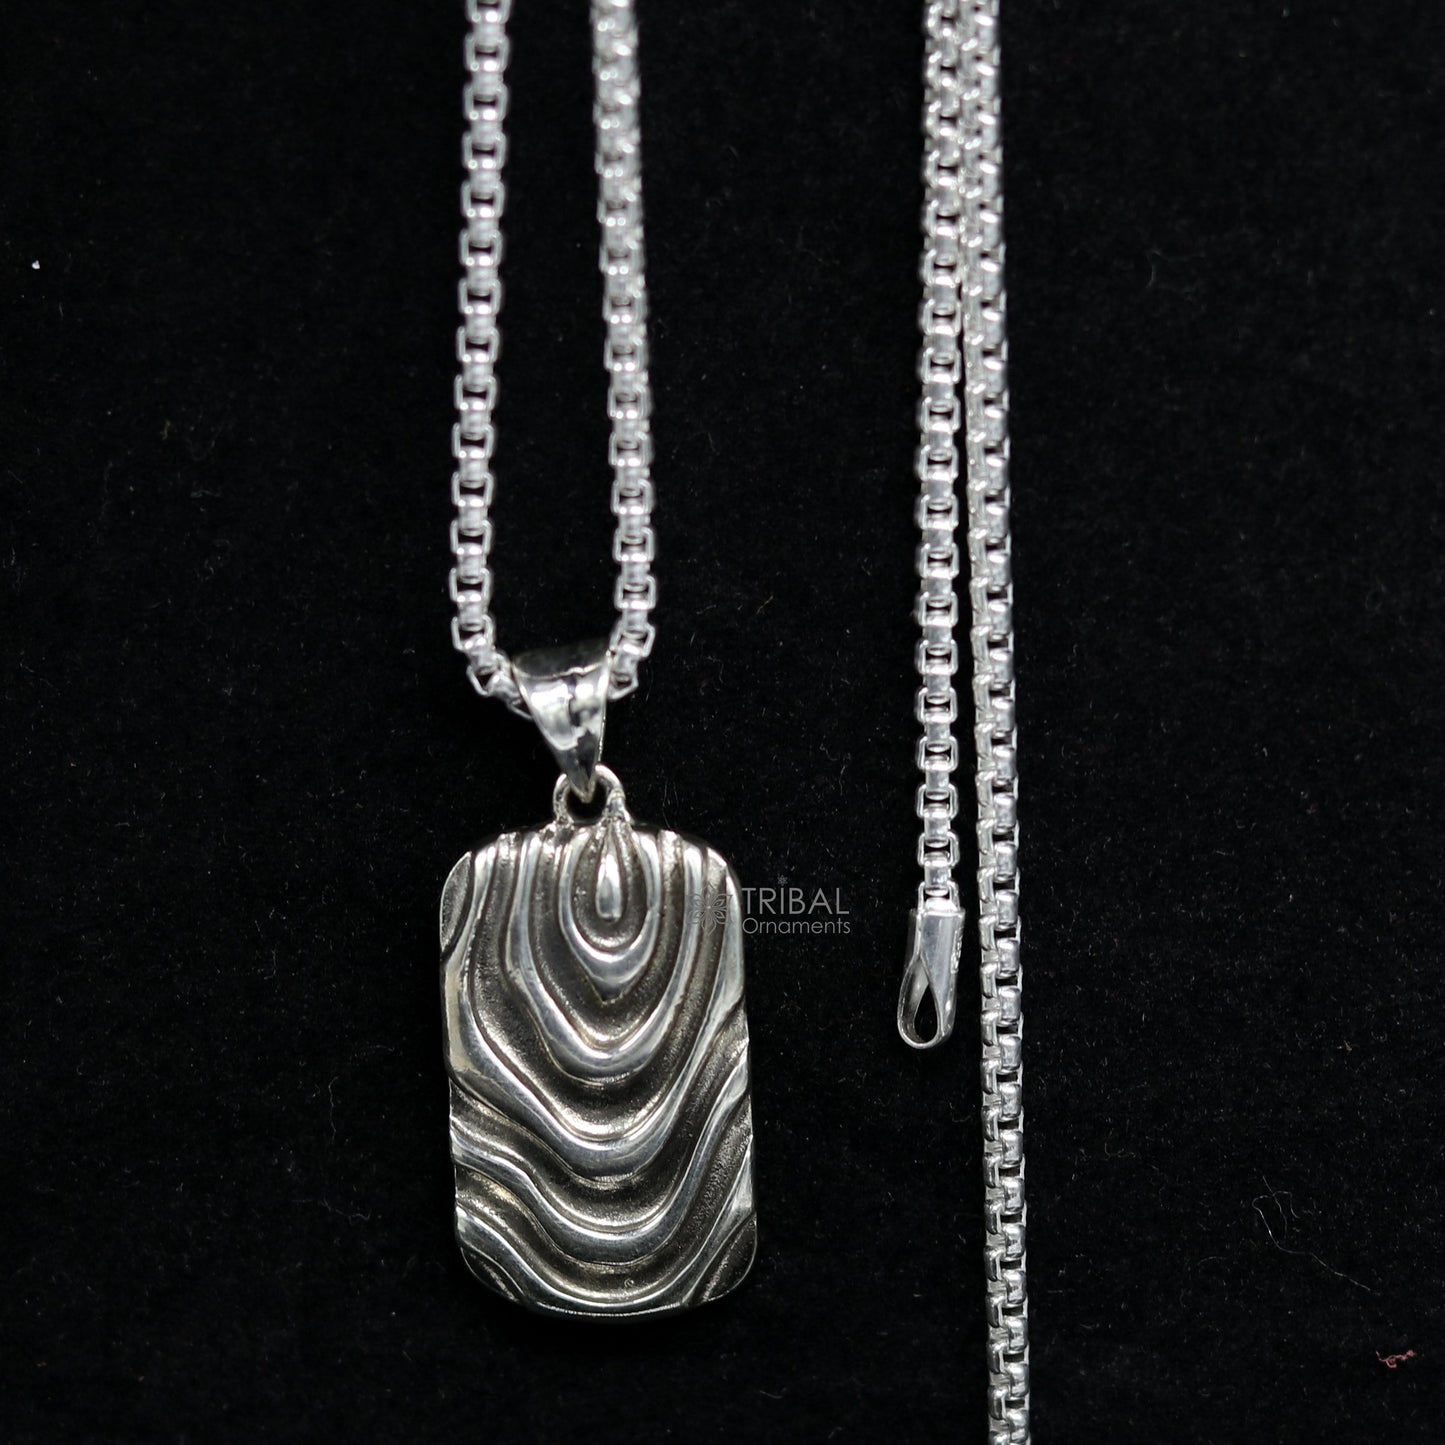 925 sterling silver unique design pendant, silver hop hop trendy pendant necklace, silver jewelry nsp640 - TRIBAL ORNAMENTS